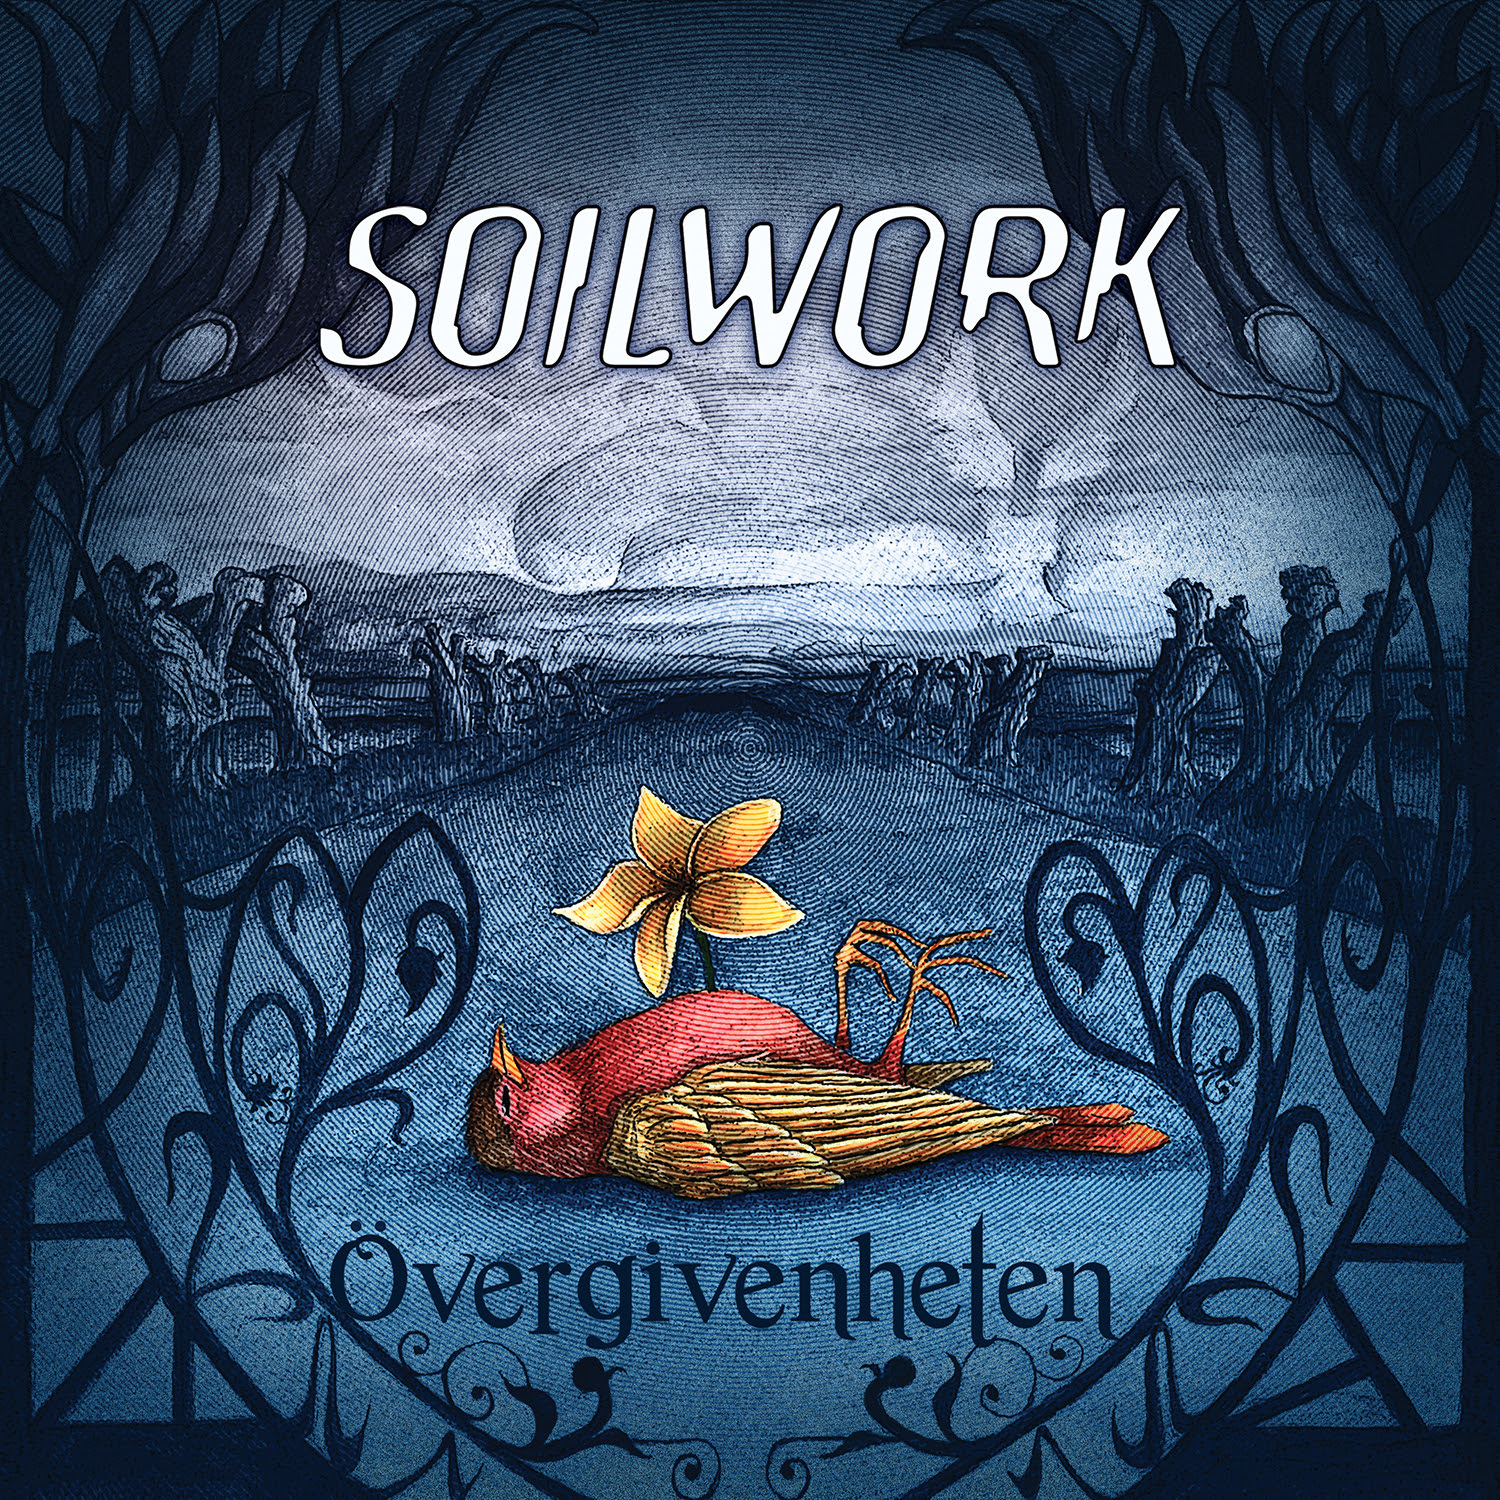 Soilwork anuncia novo álbum de estúdio “Övergivenheten”